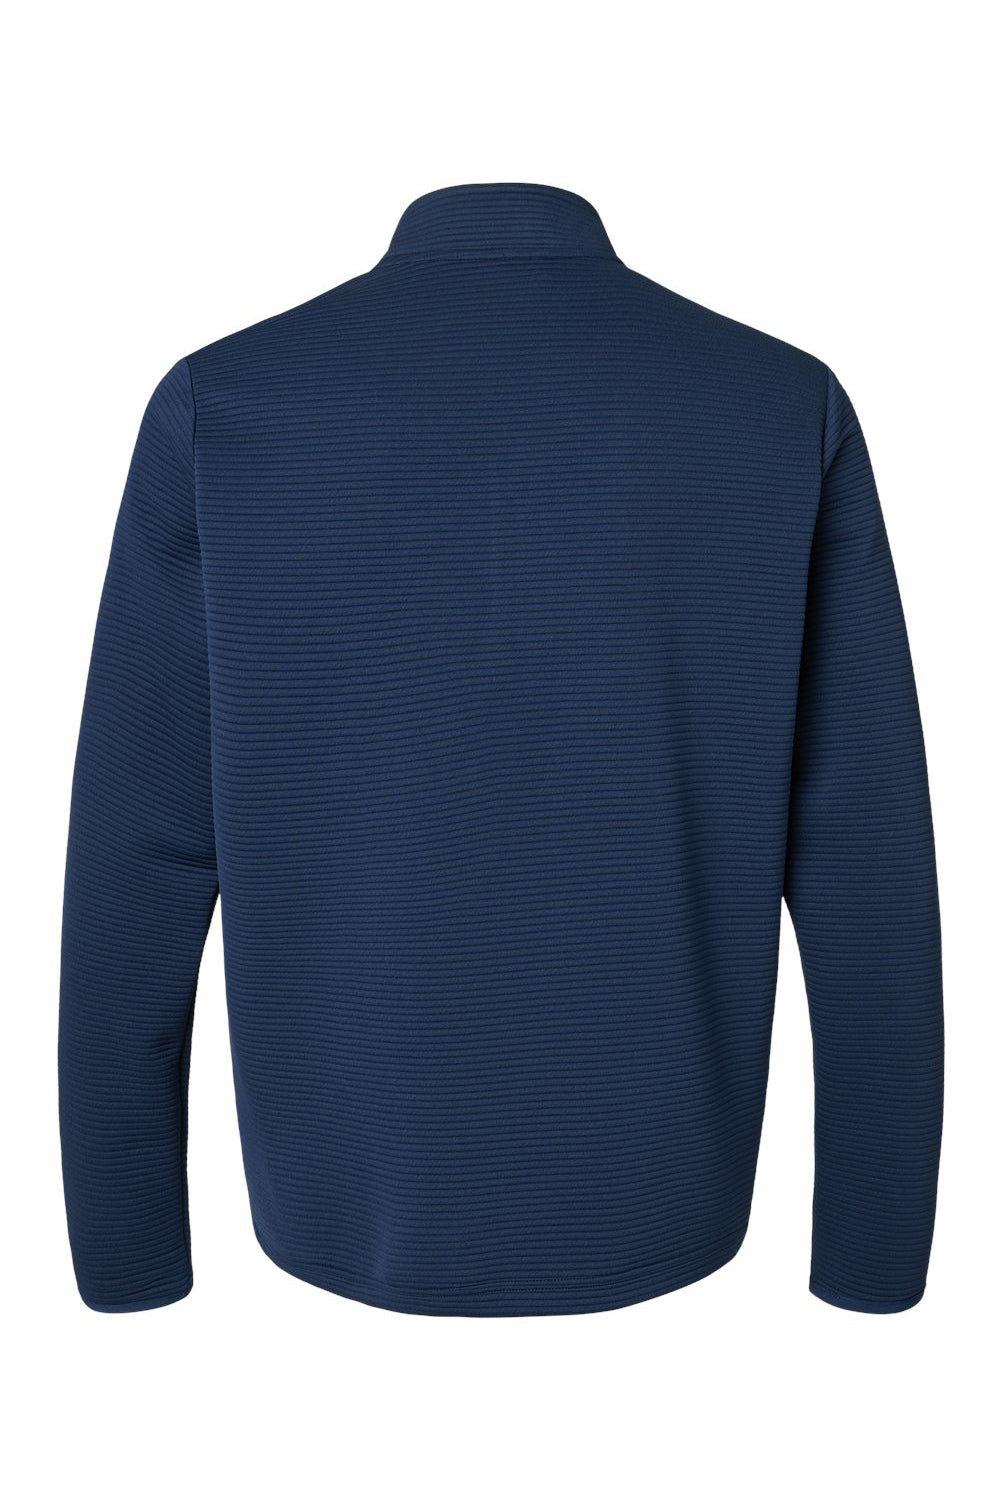 Adidas A588 Mens Spacer 1/4 Zip Sweatshirt Collegiate Navy Blue Flat Back